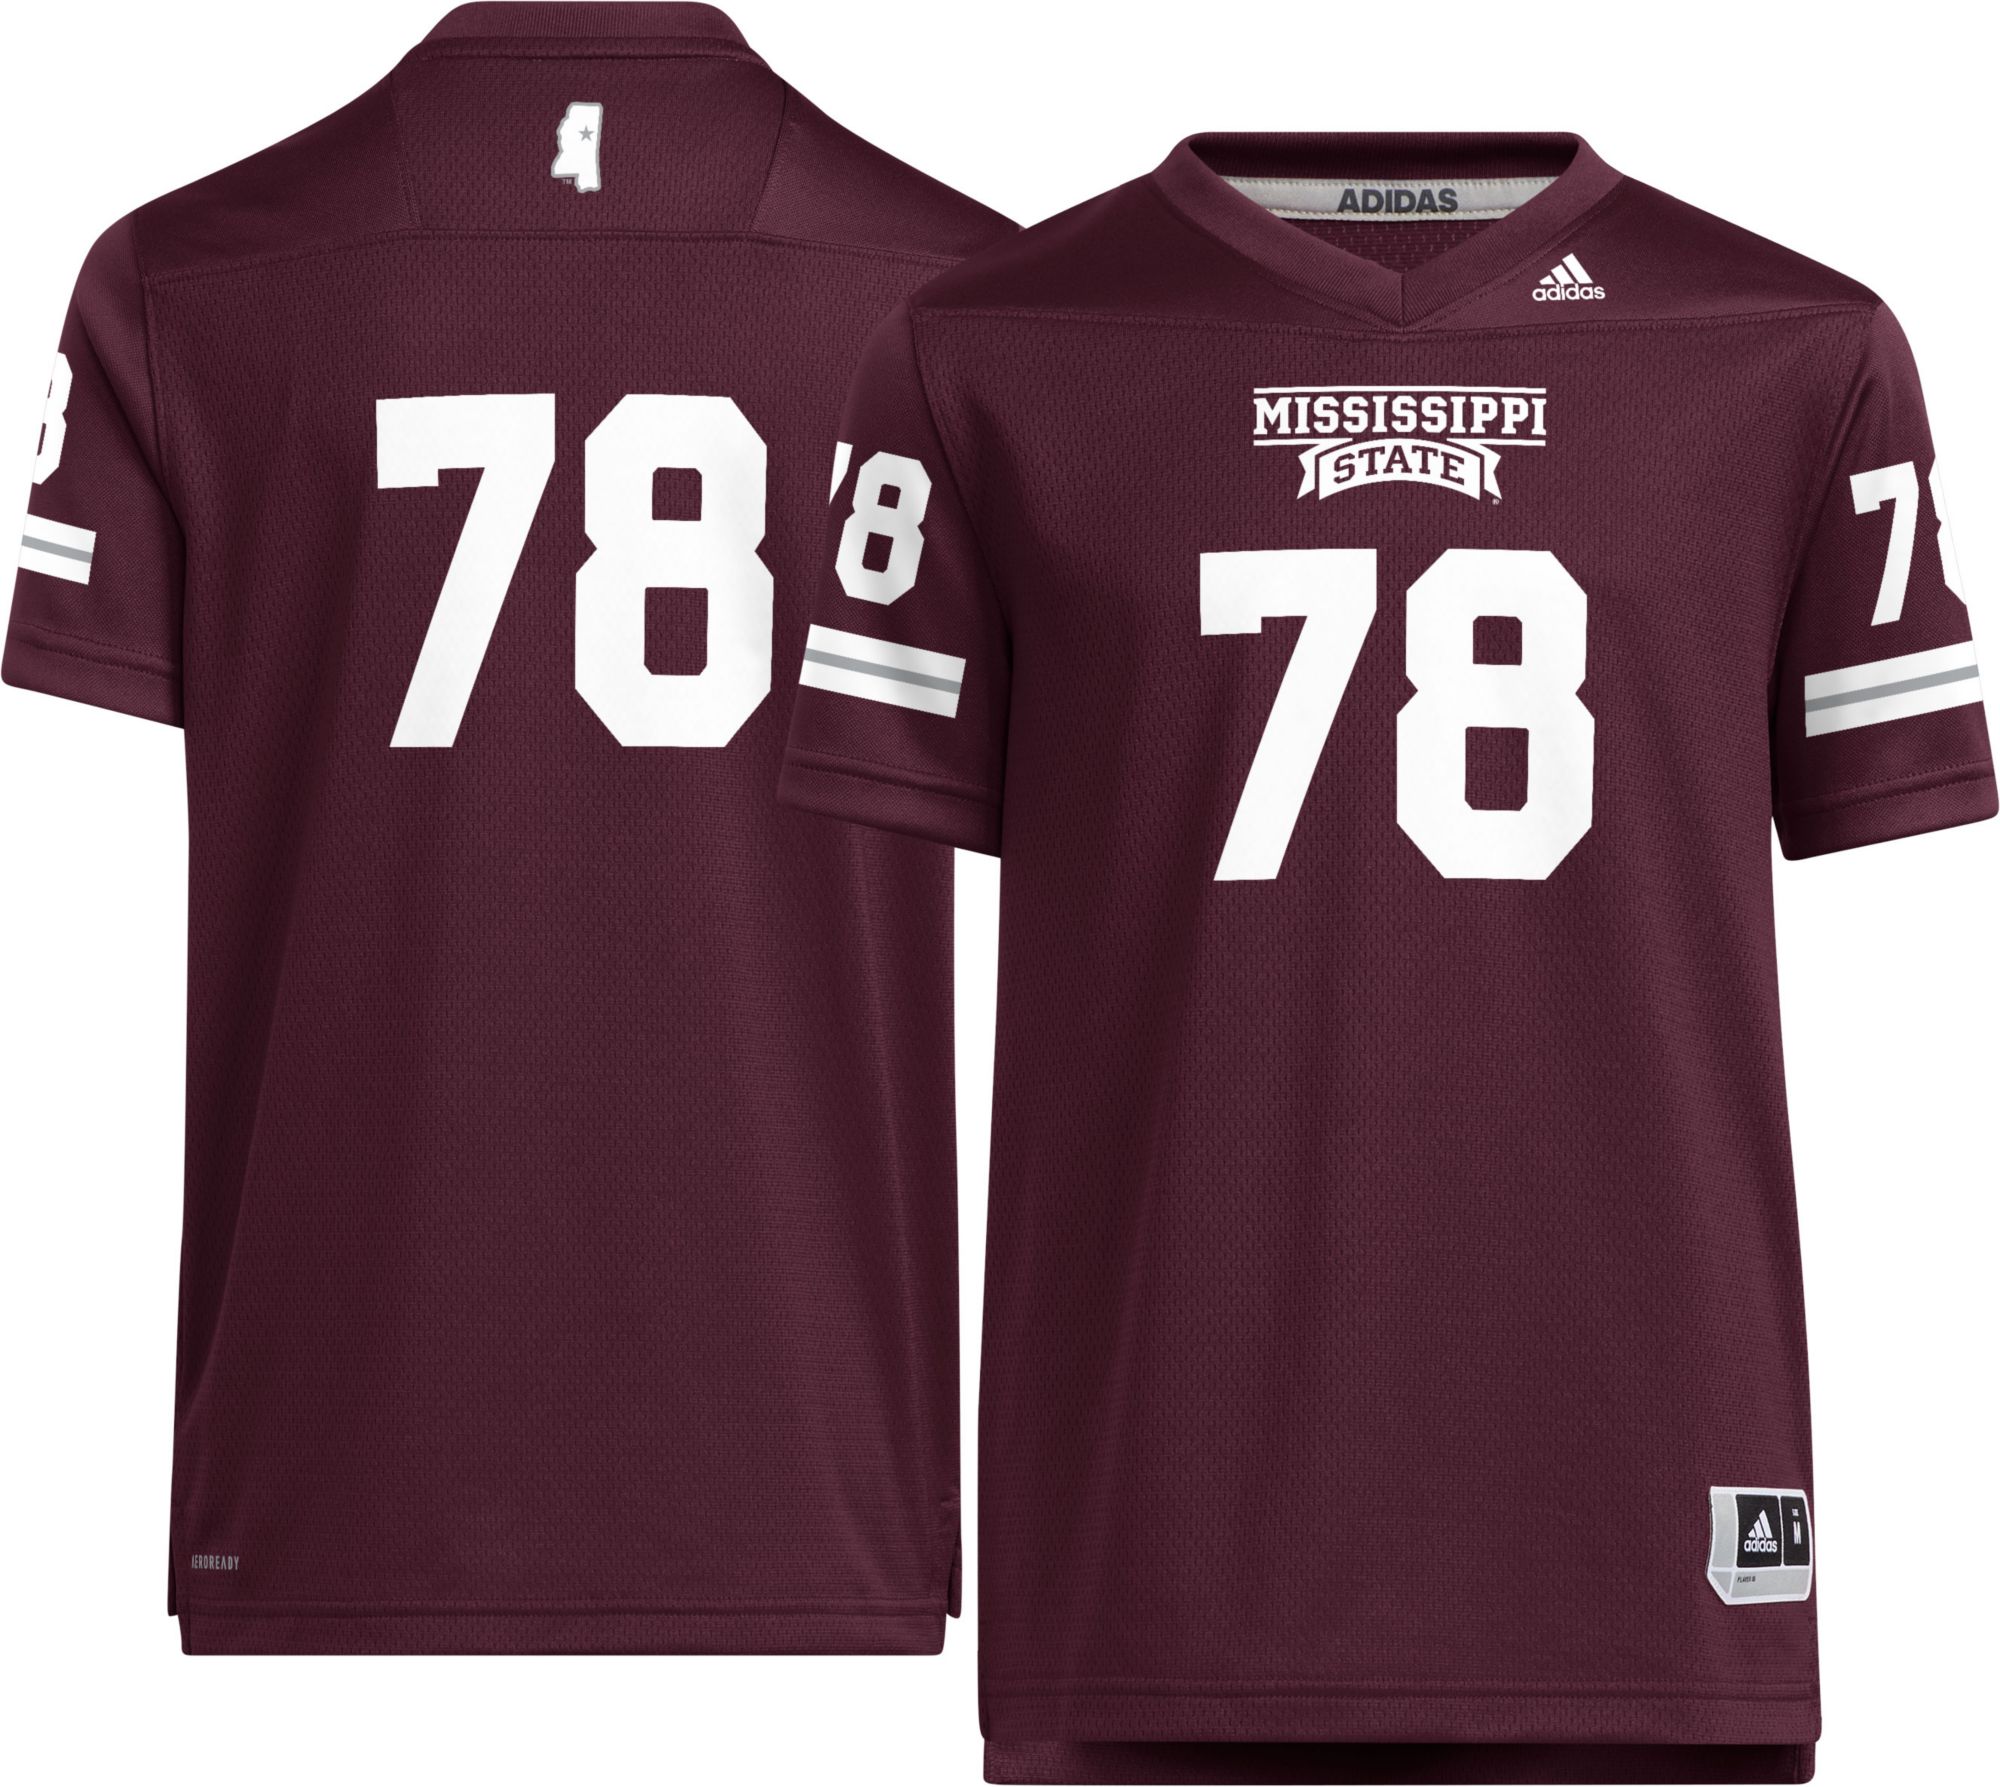 Las Vegas Men's Raiders Football Burgundy Legend Icon Performance T-Shirt